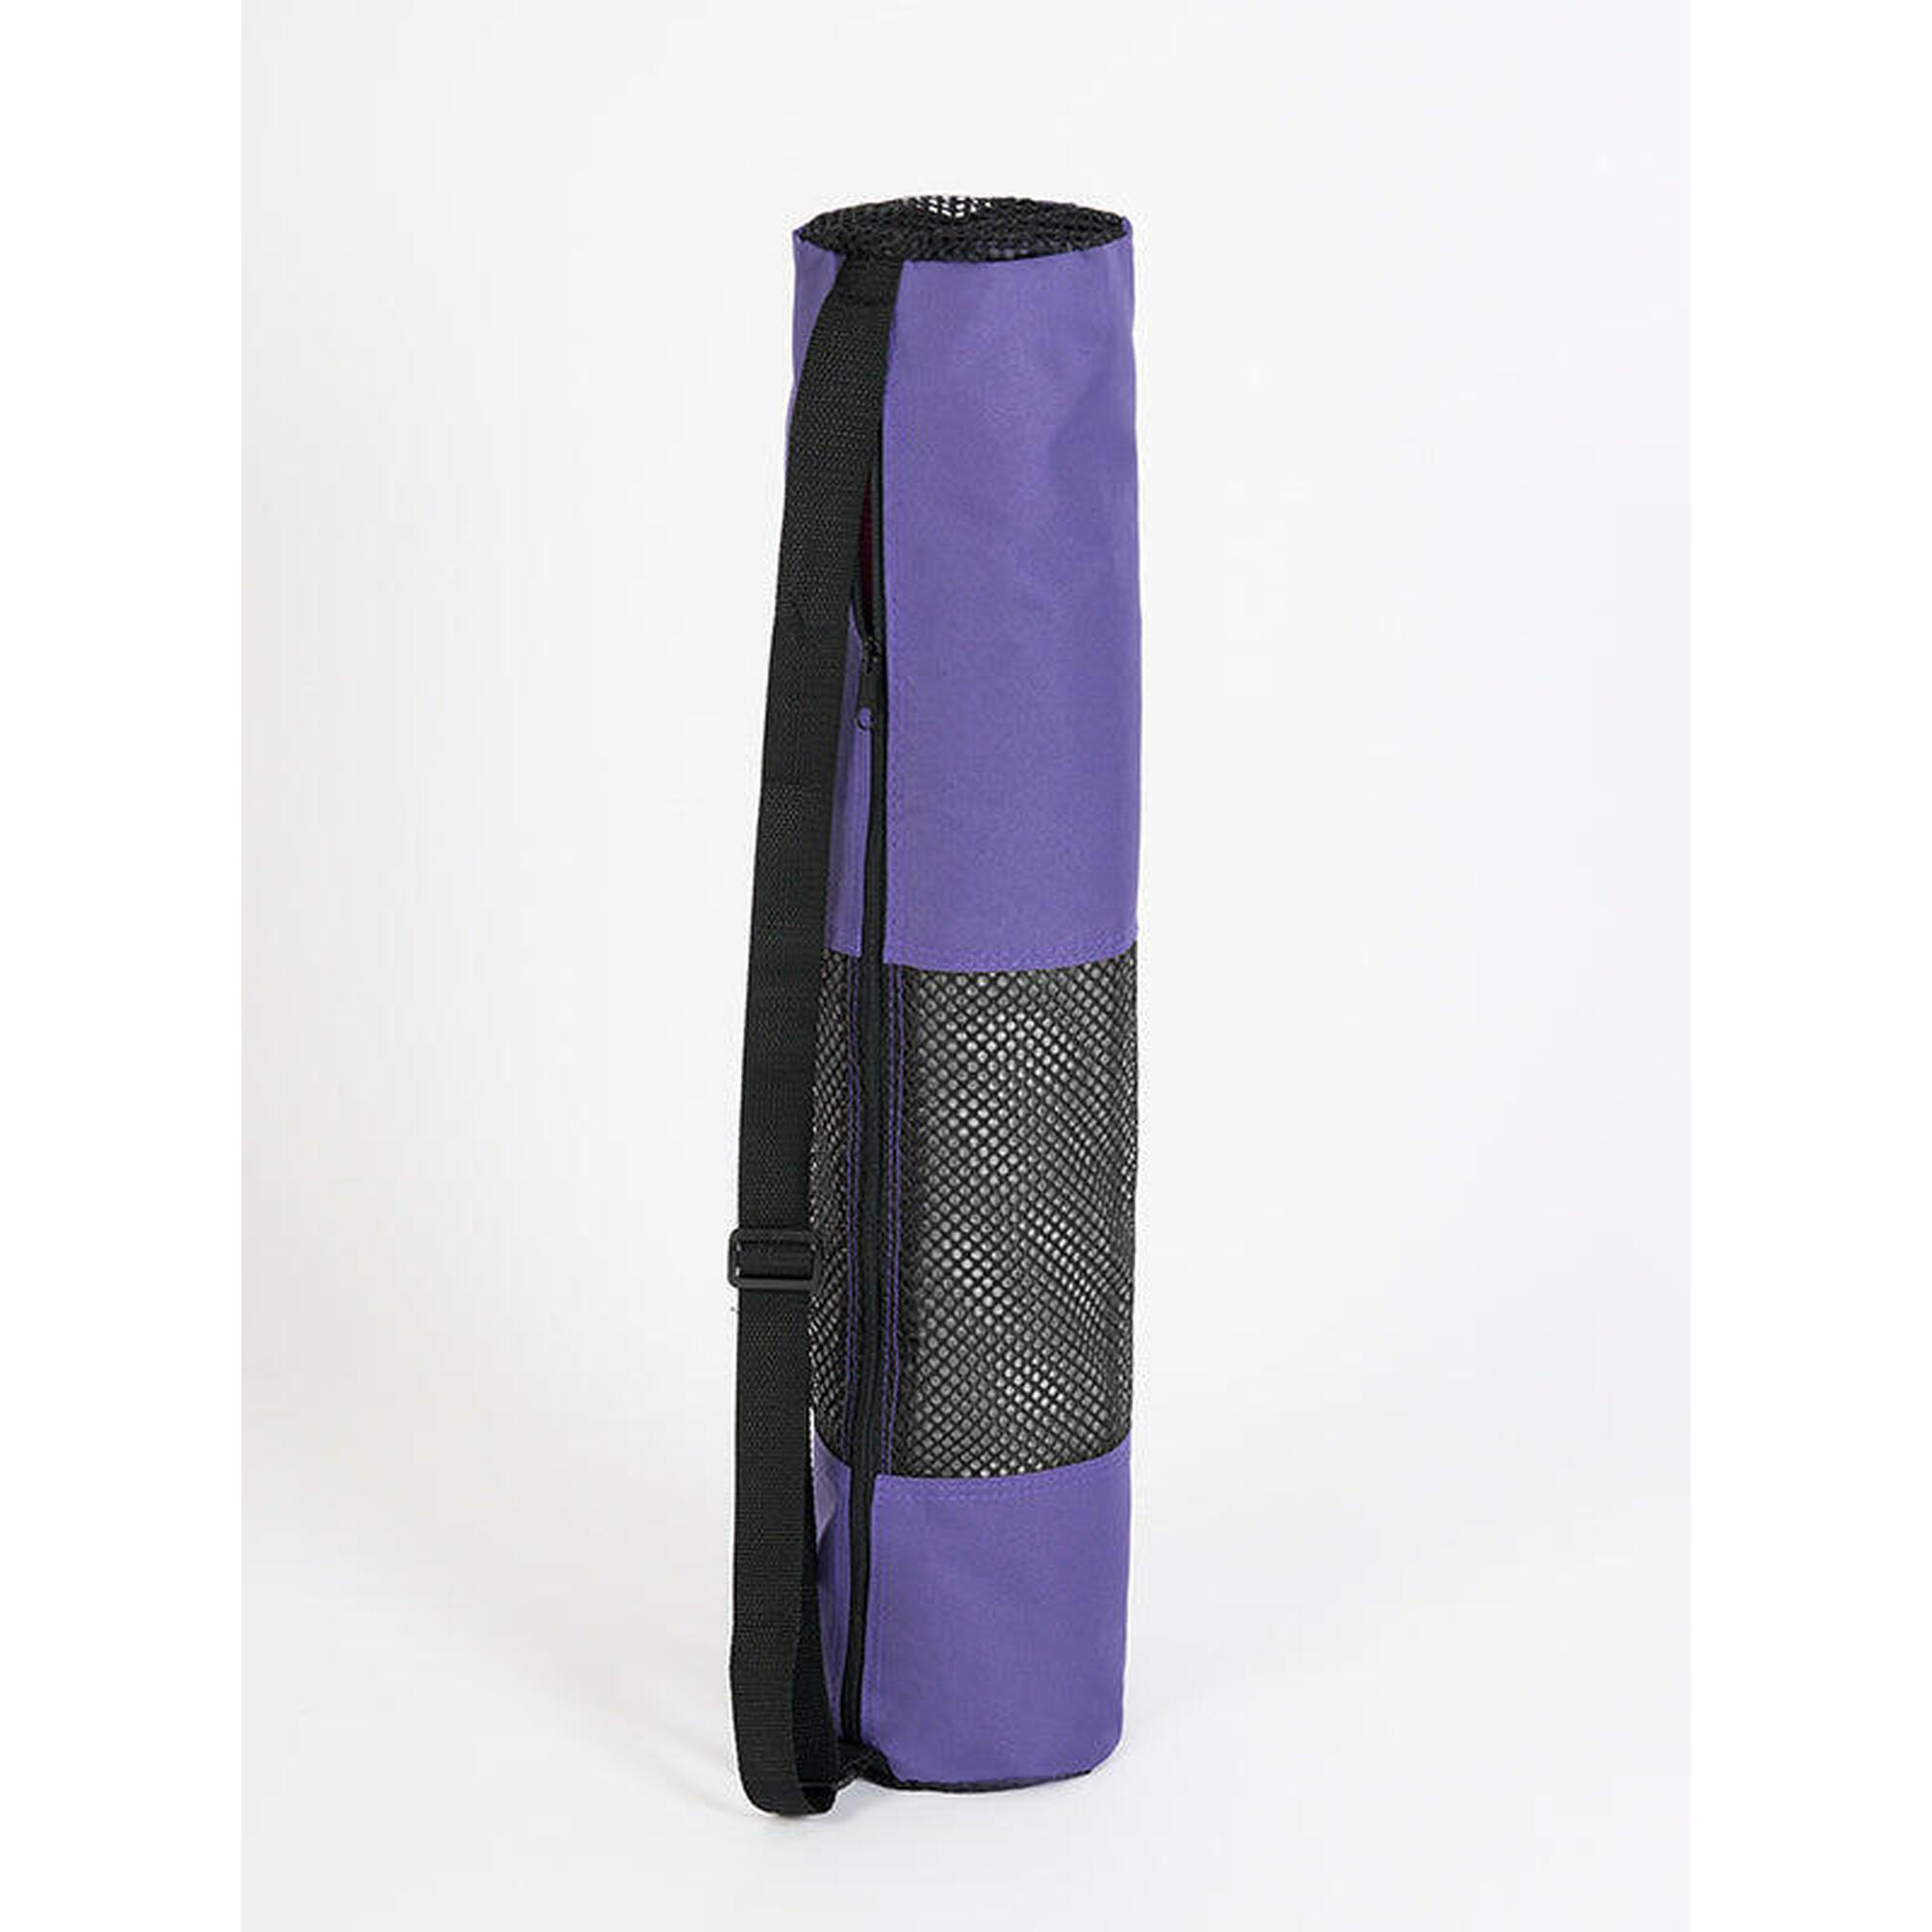 Yoga Studio Lightweight Yoga Mat Bag - Purple 1/4